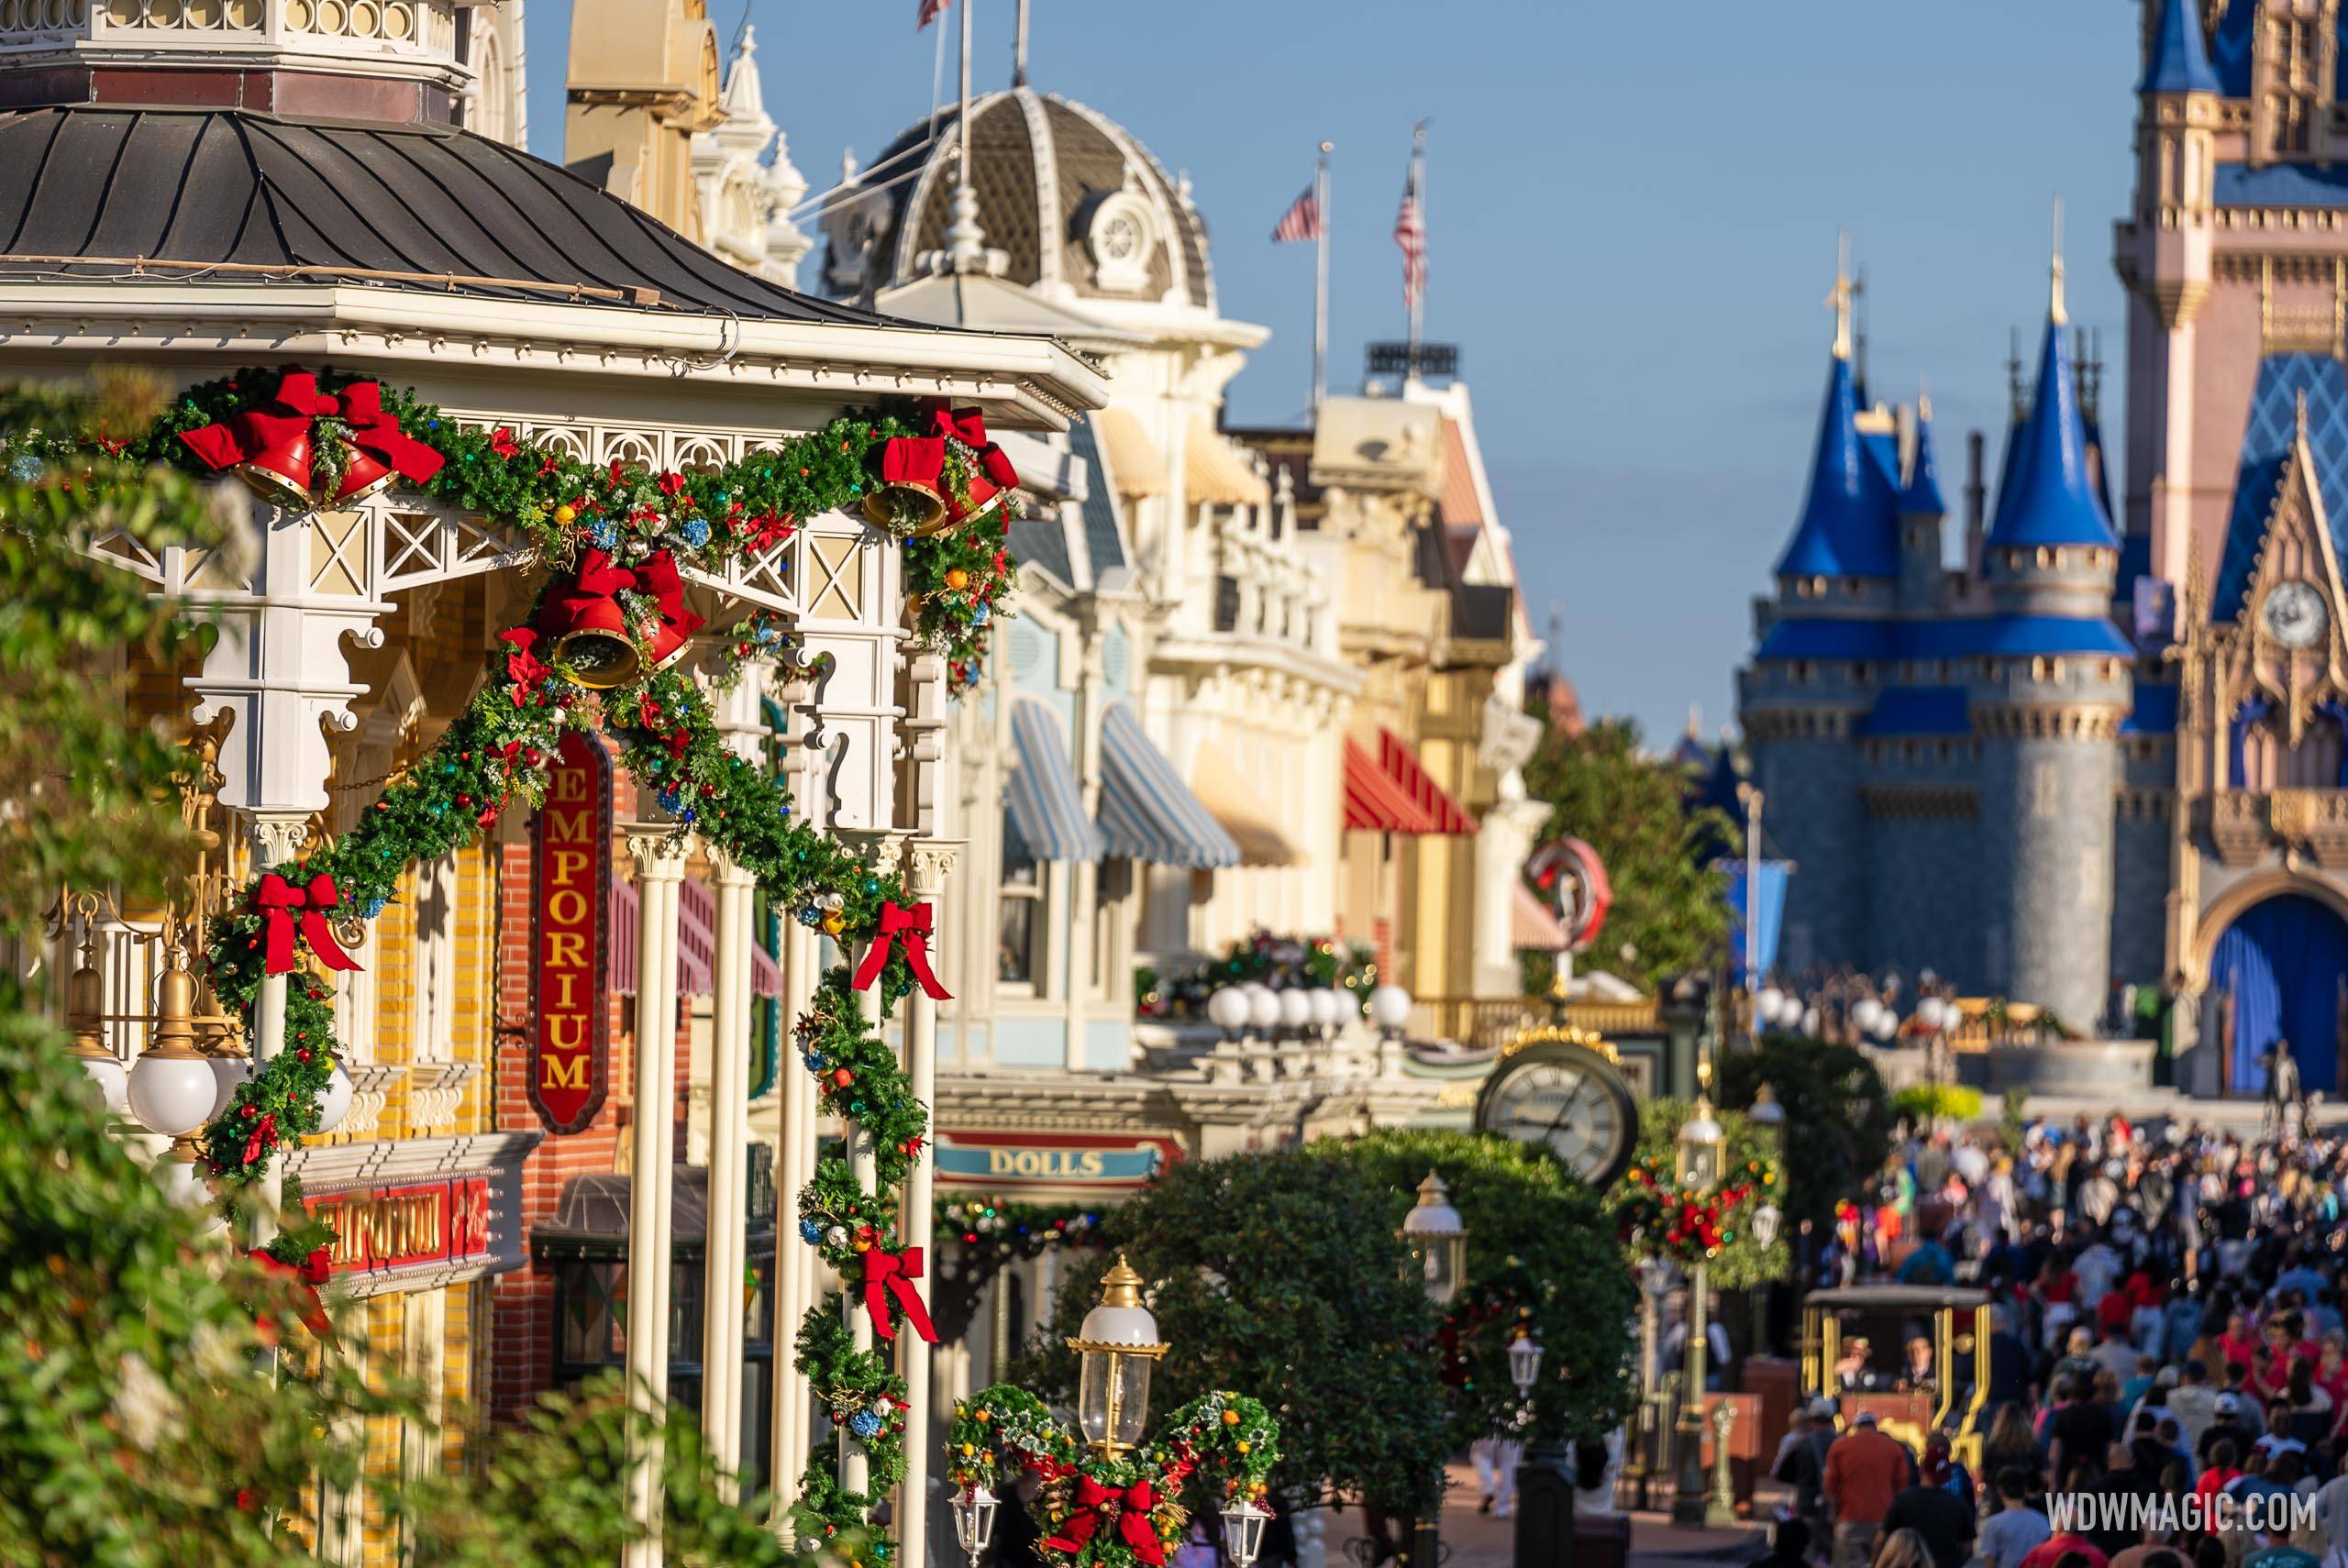 First glimpse of Christmas Holiday decorations at Walt Disney World's Magic Kingdom